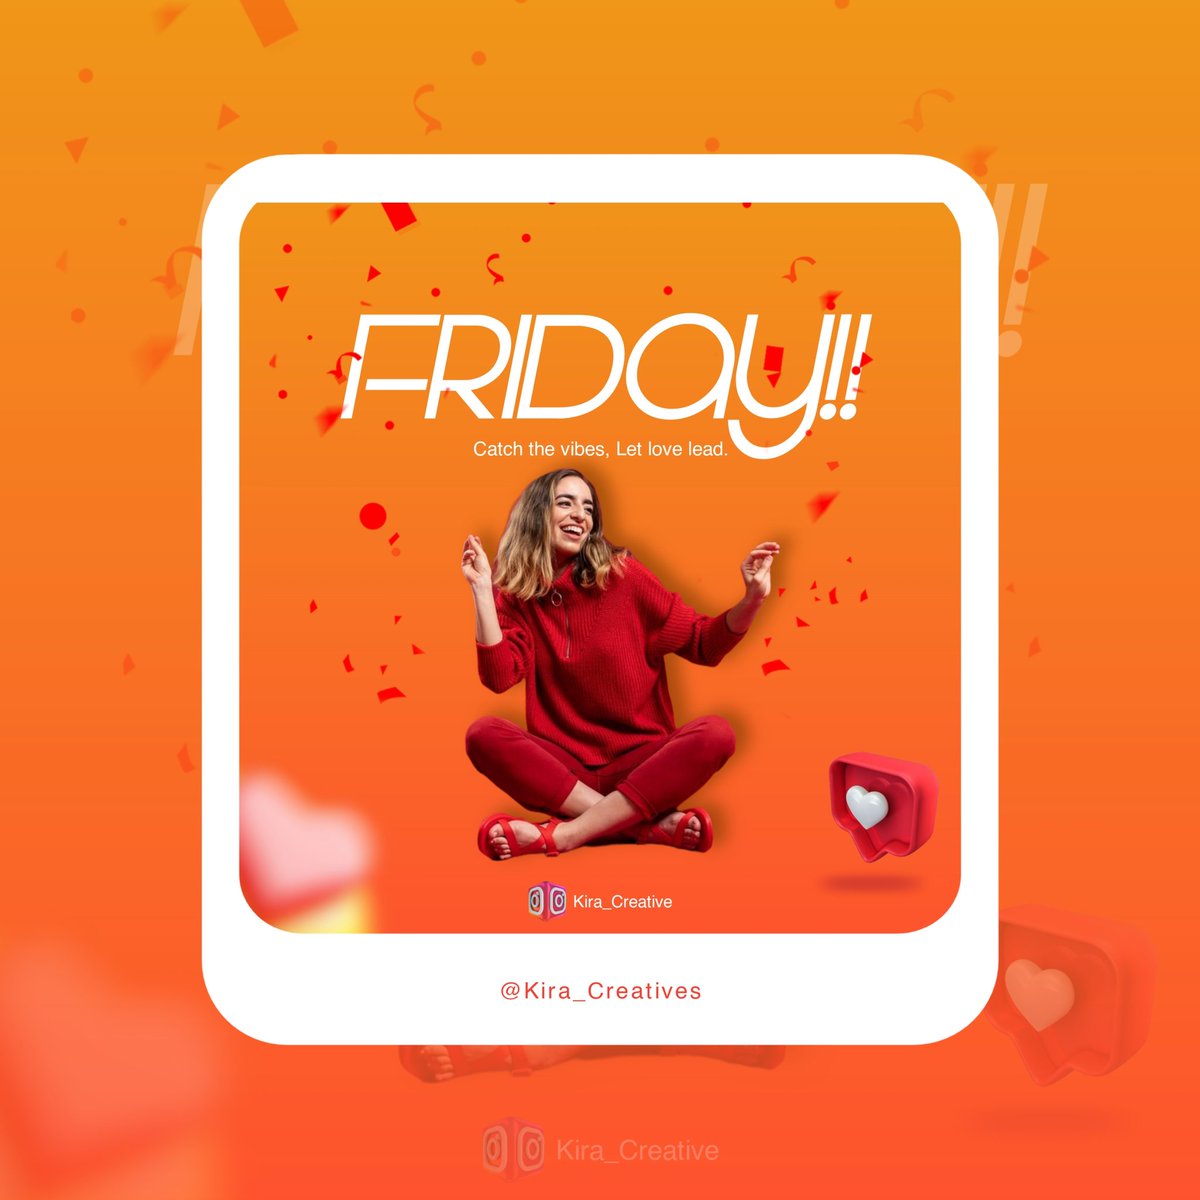 It's Friday ❤️
Catch the vibe and let love lead

#socialmediamarketing #TGIF #socialmediapost #GraphicDesigner #femaledesigner #FridayVibes